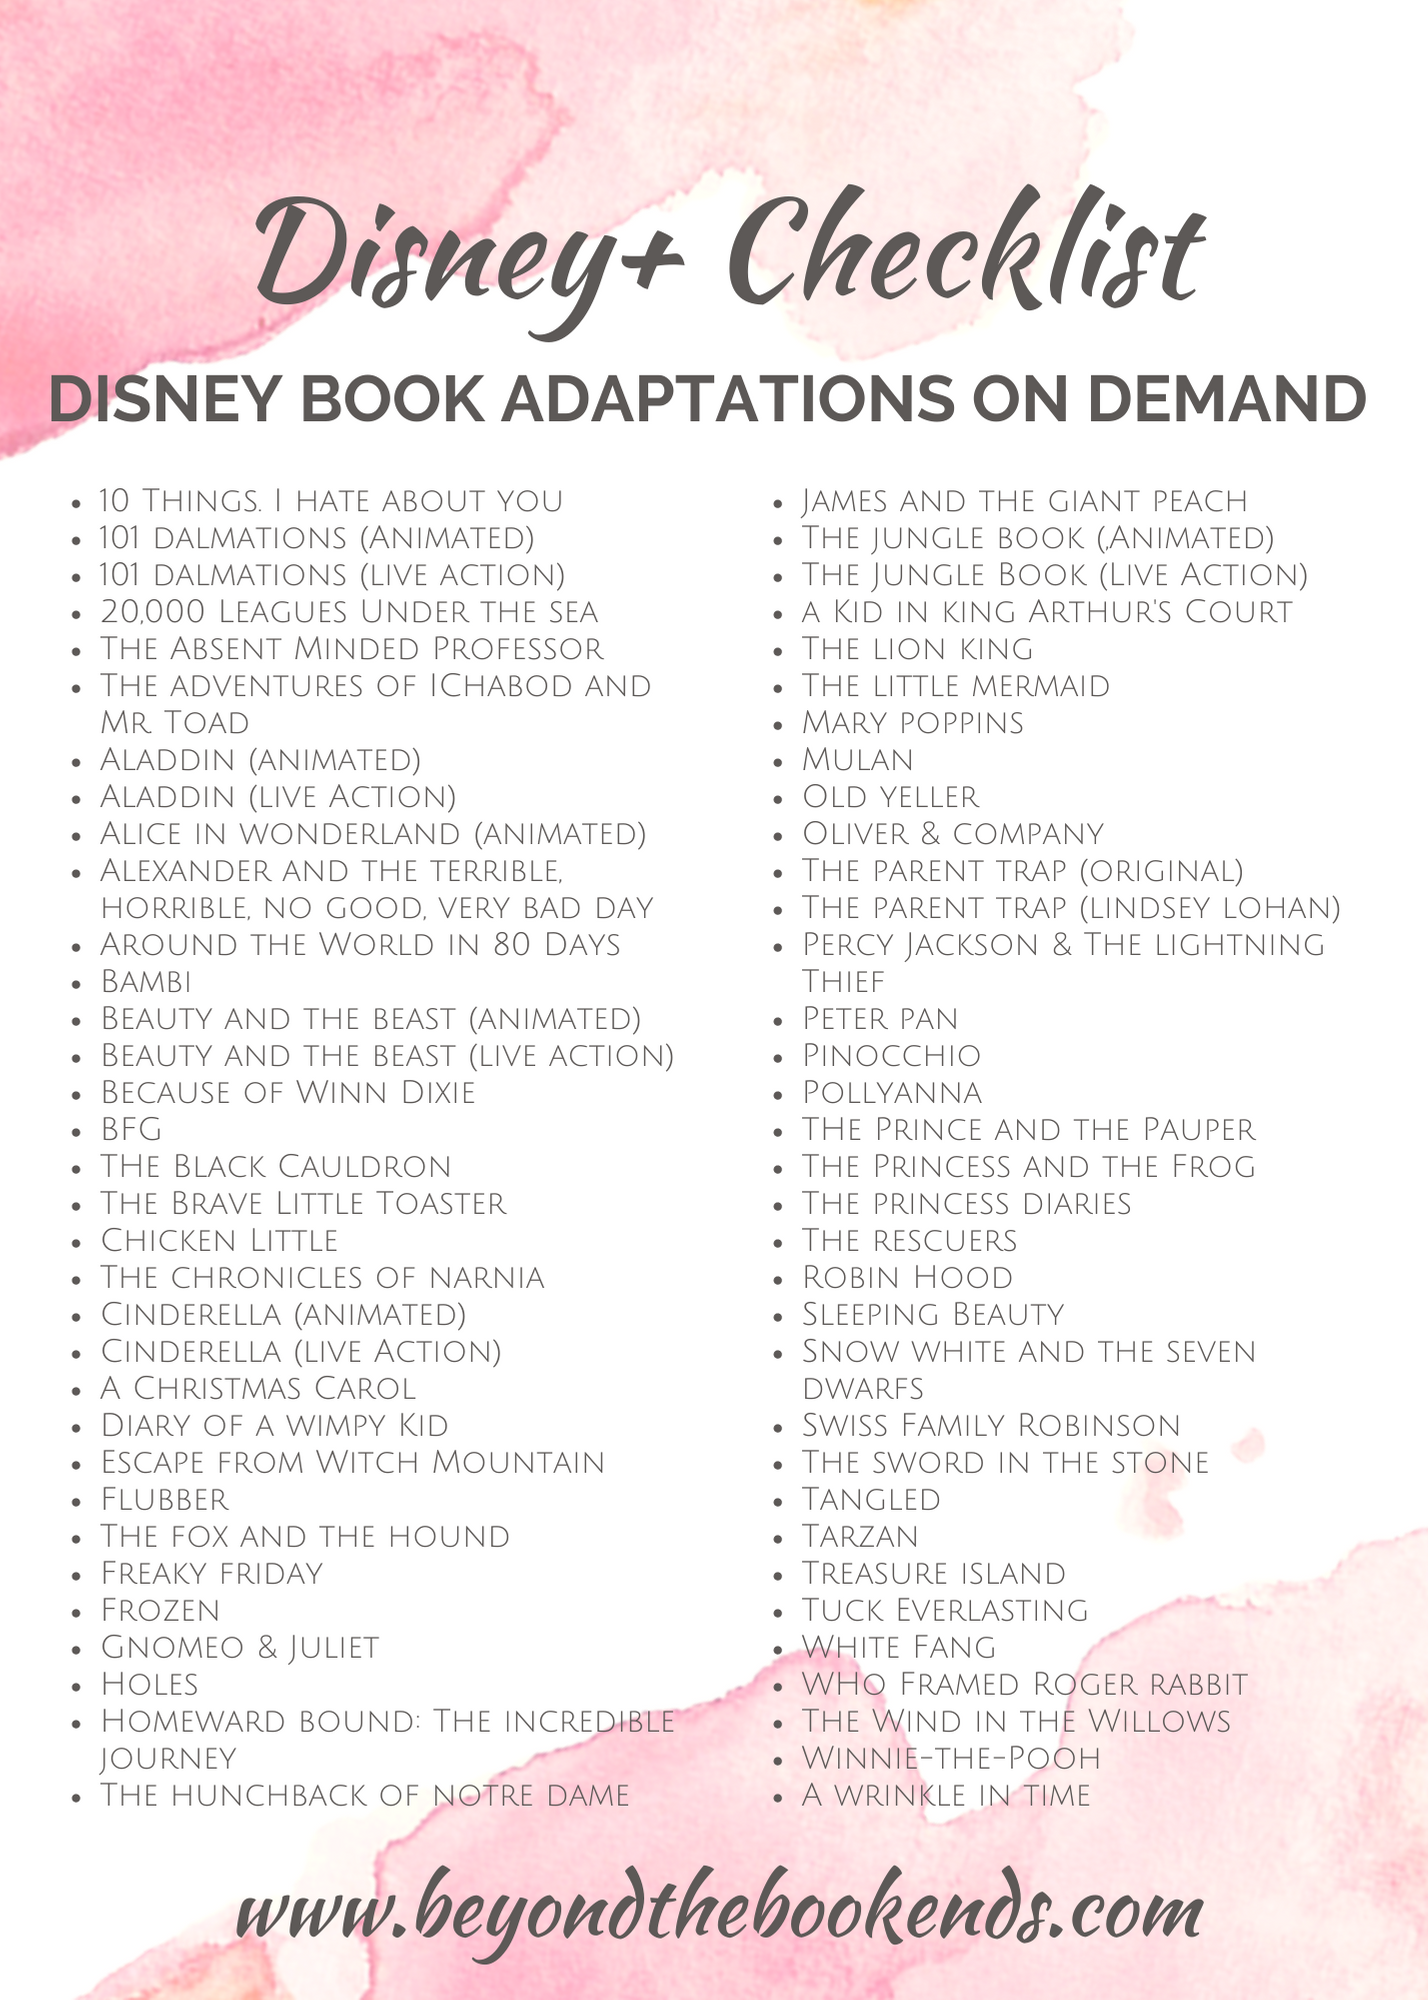 Disney Book Adaptations on Disney+